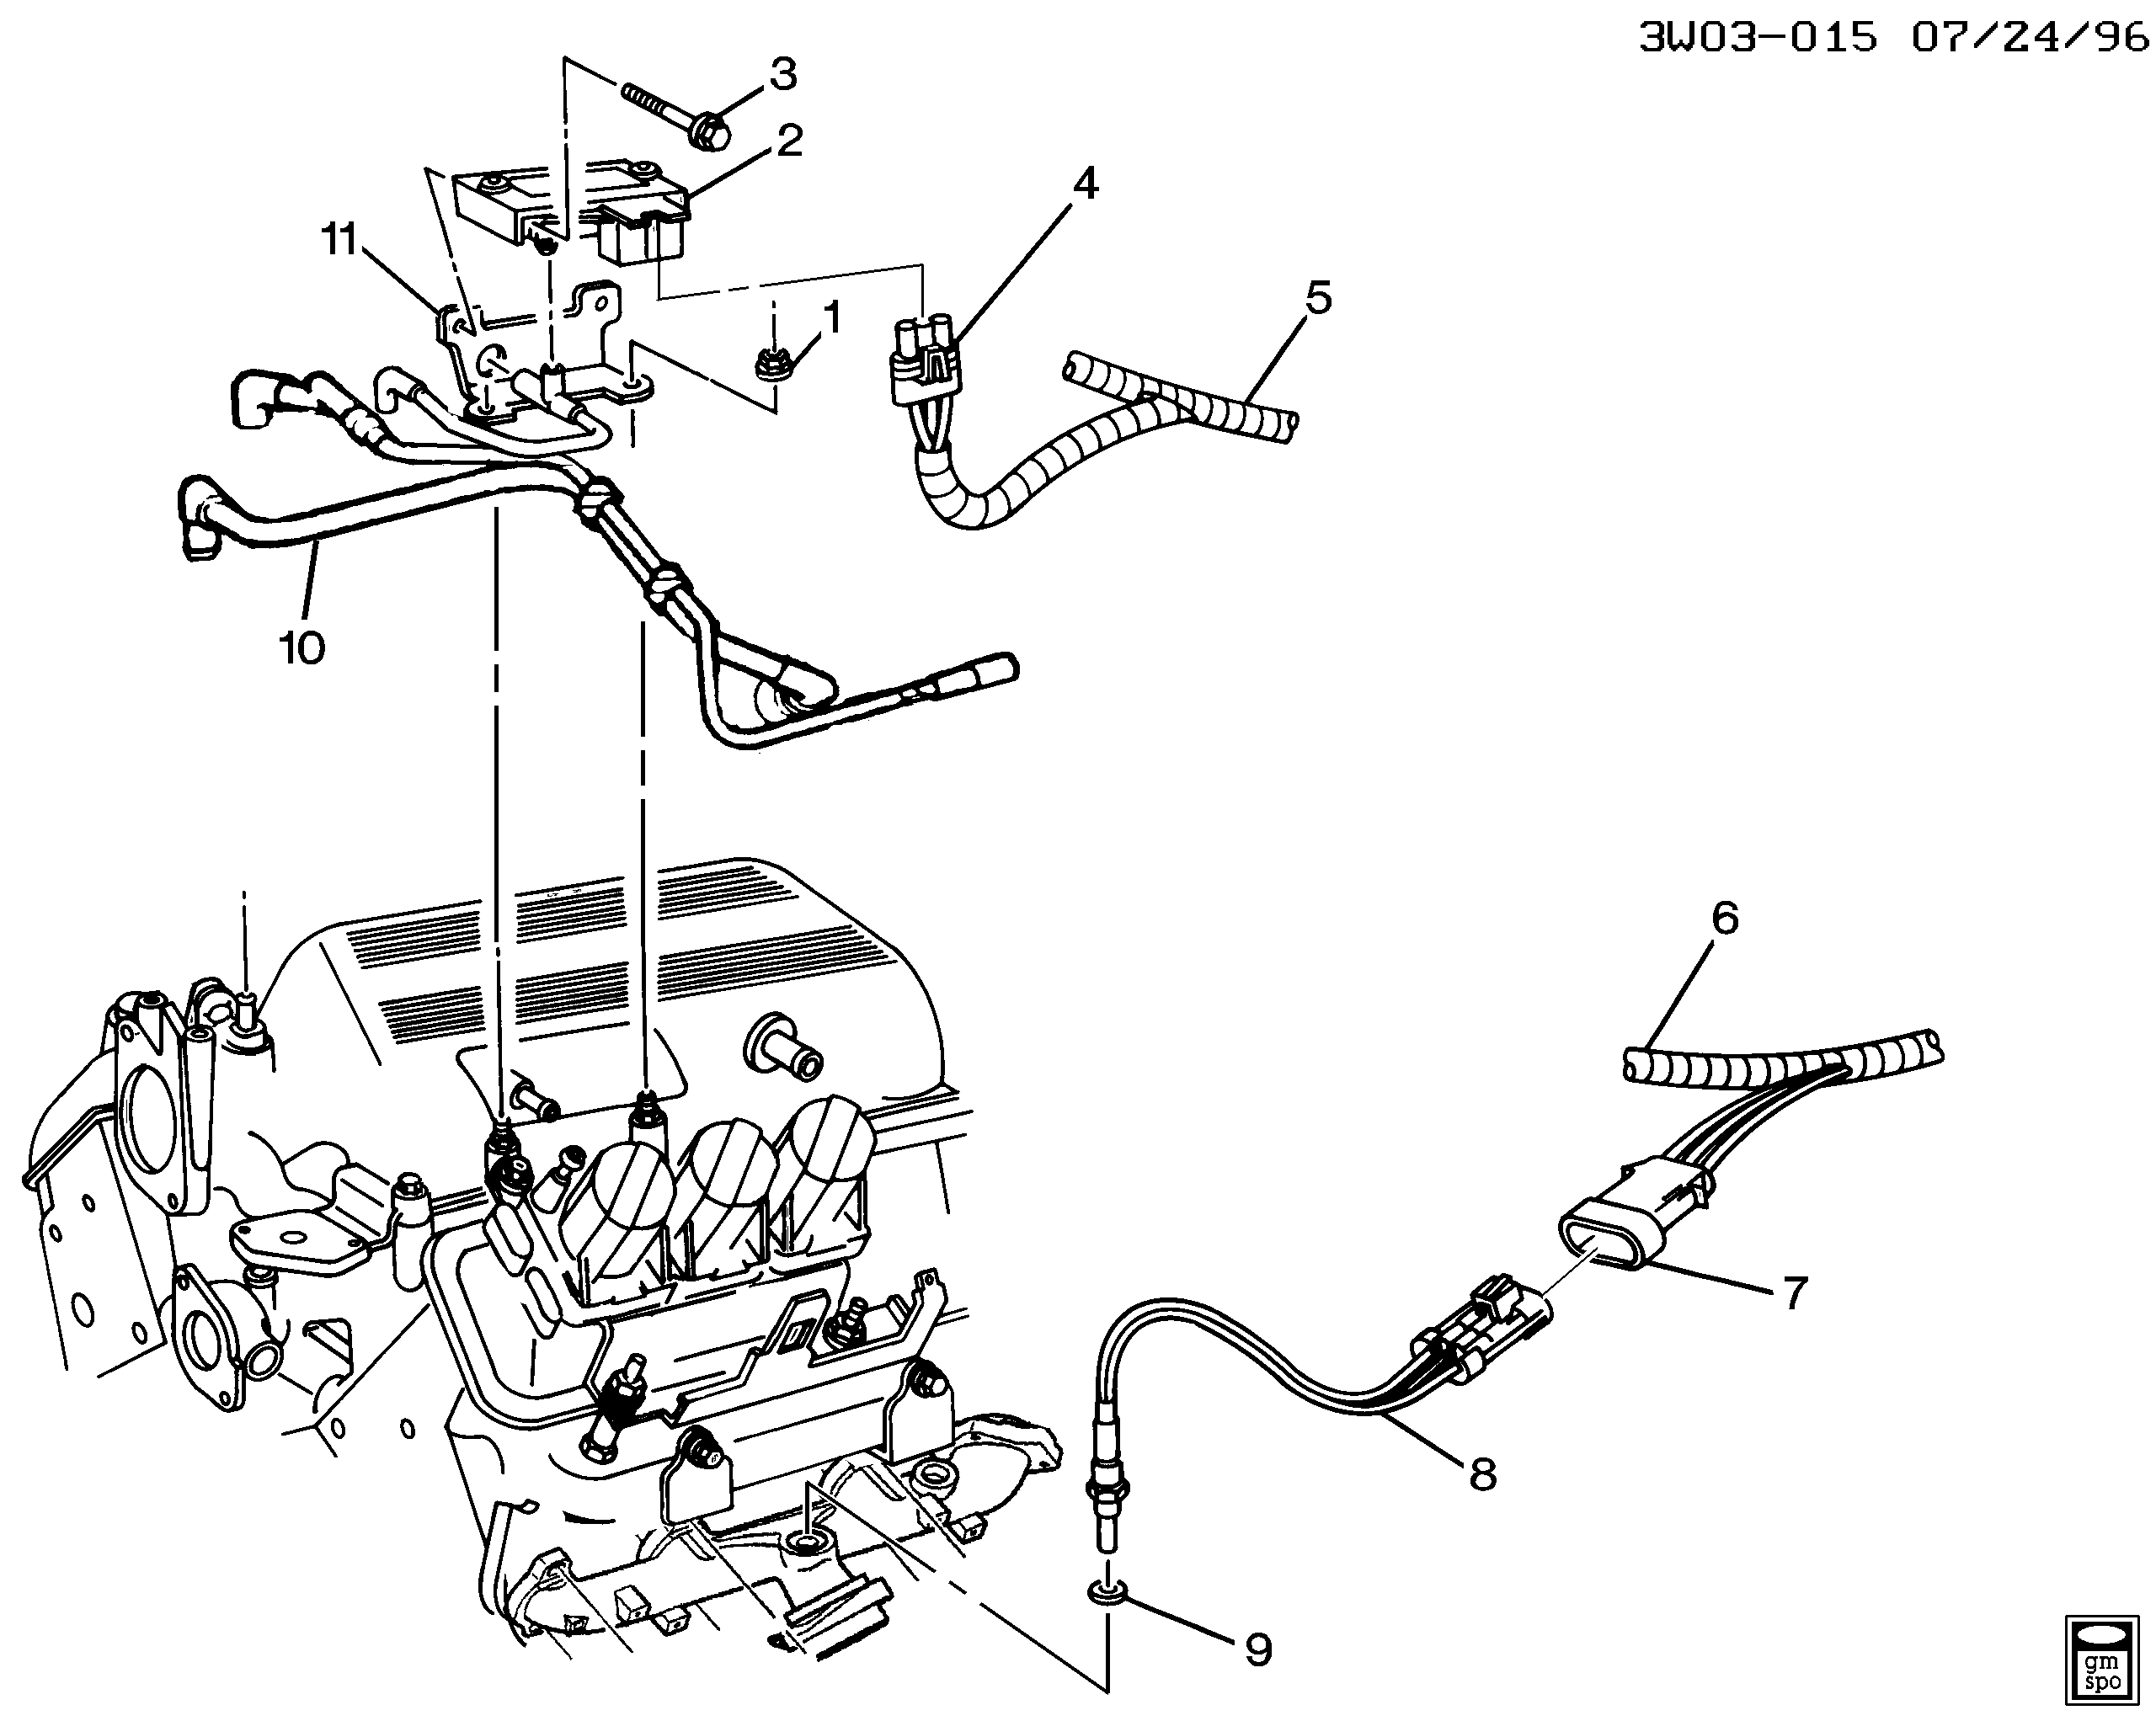 1994-1996 W M.A.P. & OXYGEN SENSORS (L82/3.1M)